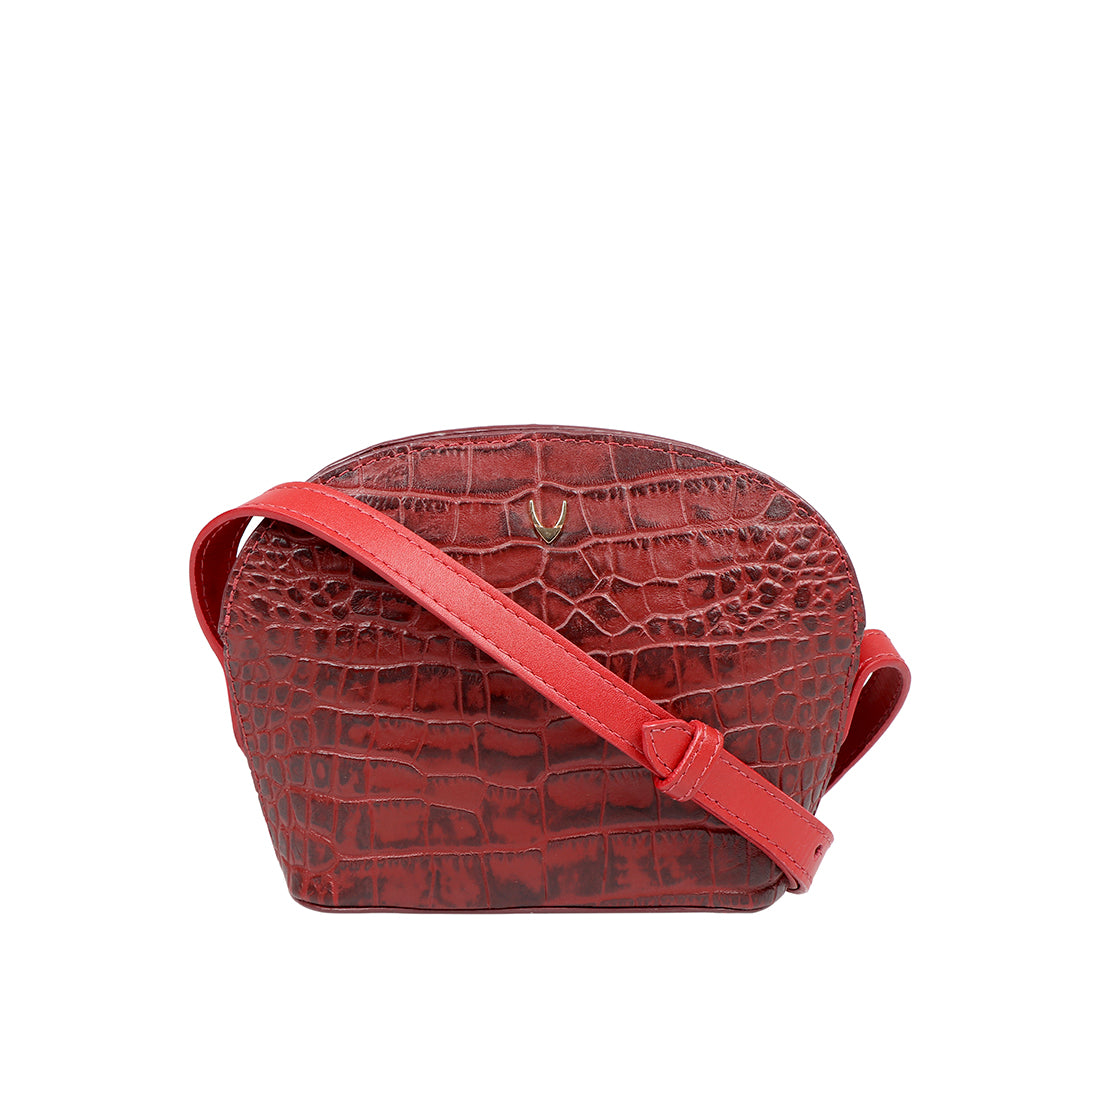 Buy Red Harmony 03 Sling Bag Online - Hidesign